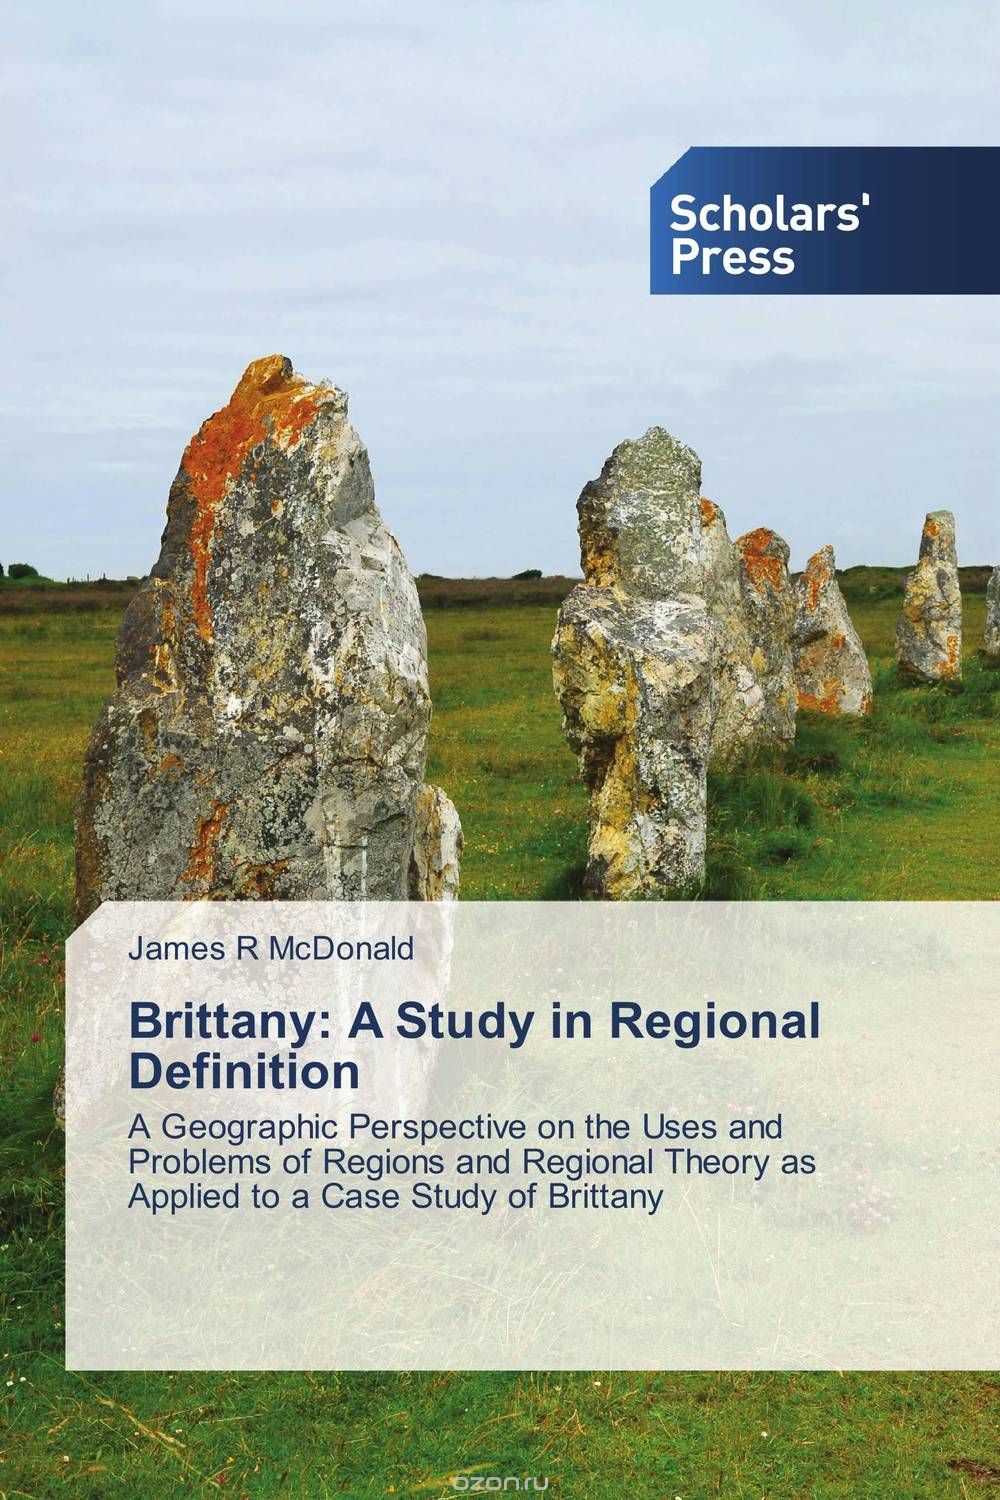 Скачать книгу "Brittany: A Study in Regional Definition"